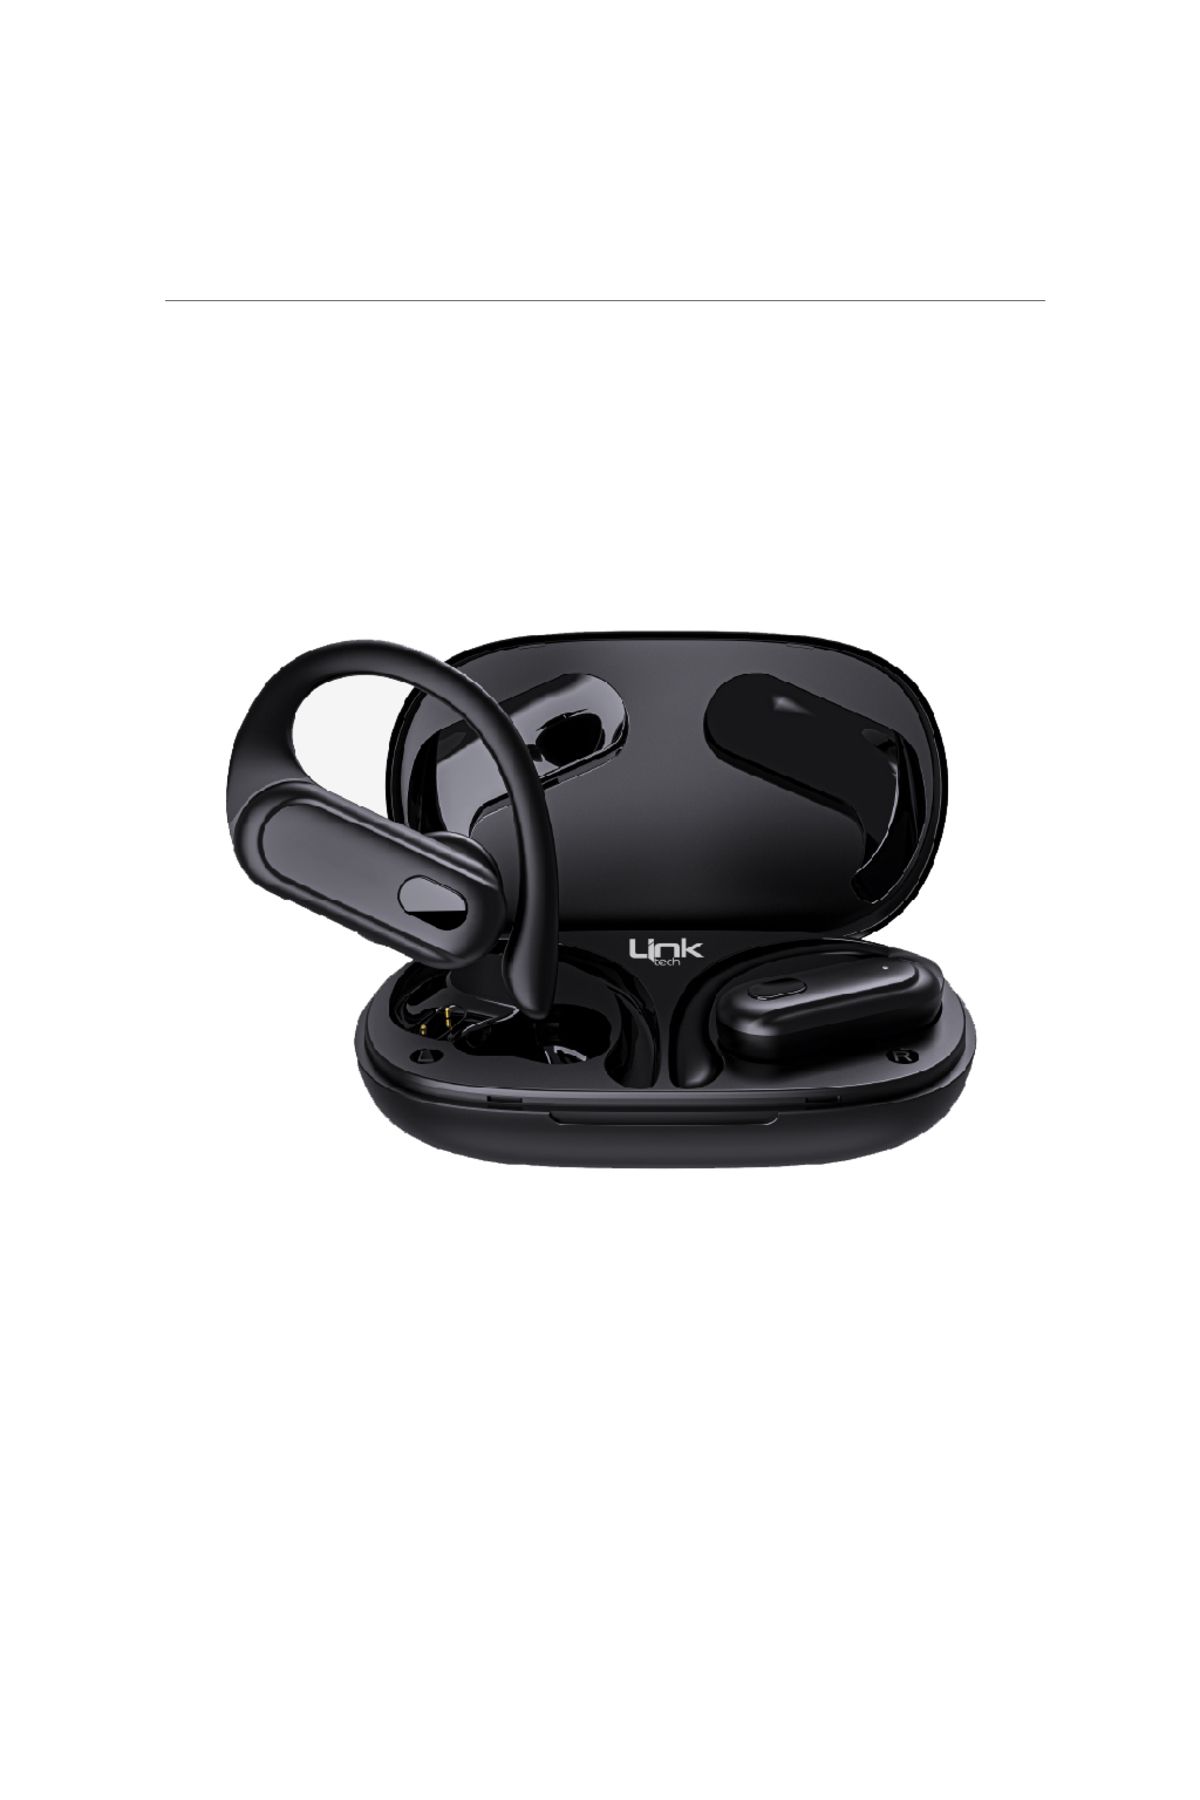 Linktech Link Tech S28 Tws Spor Kancalı Bluetooth Kulaklık Siyah